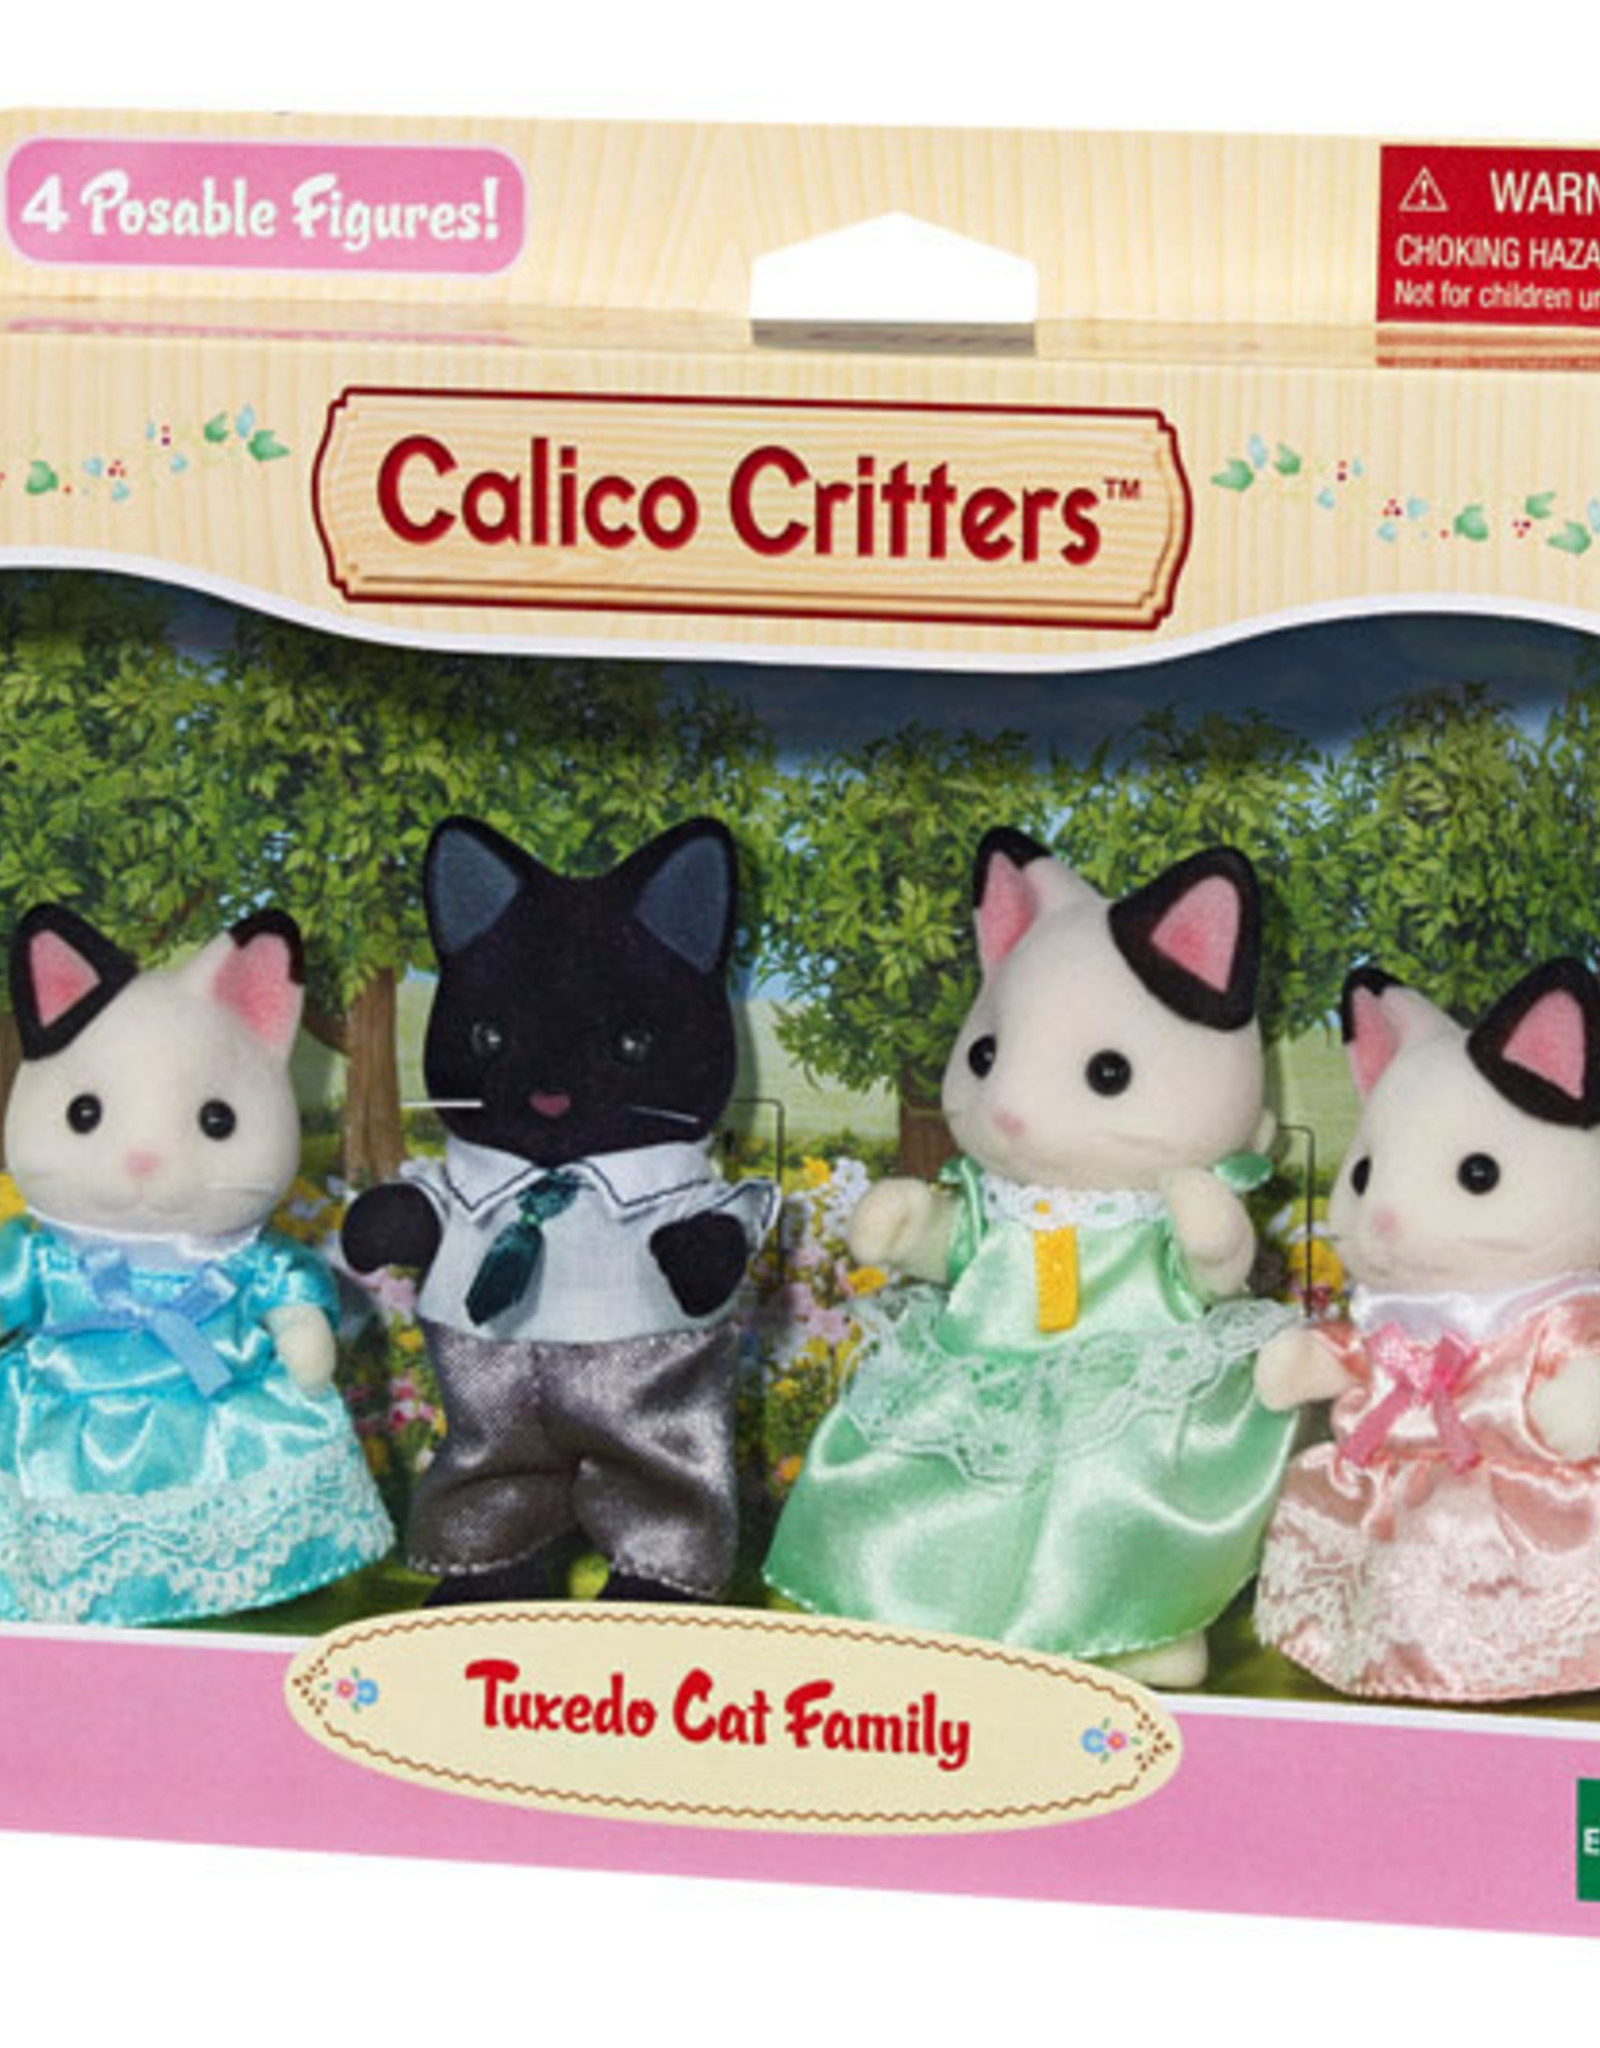 Calico Critters CC Tuxedo Cat Family